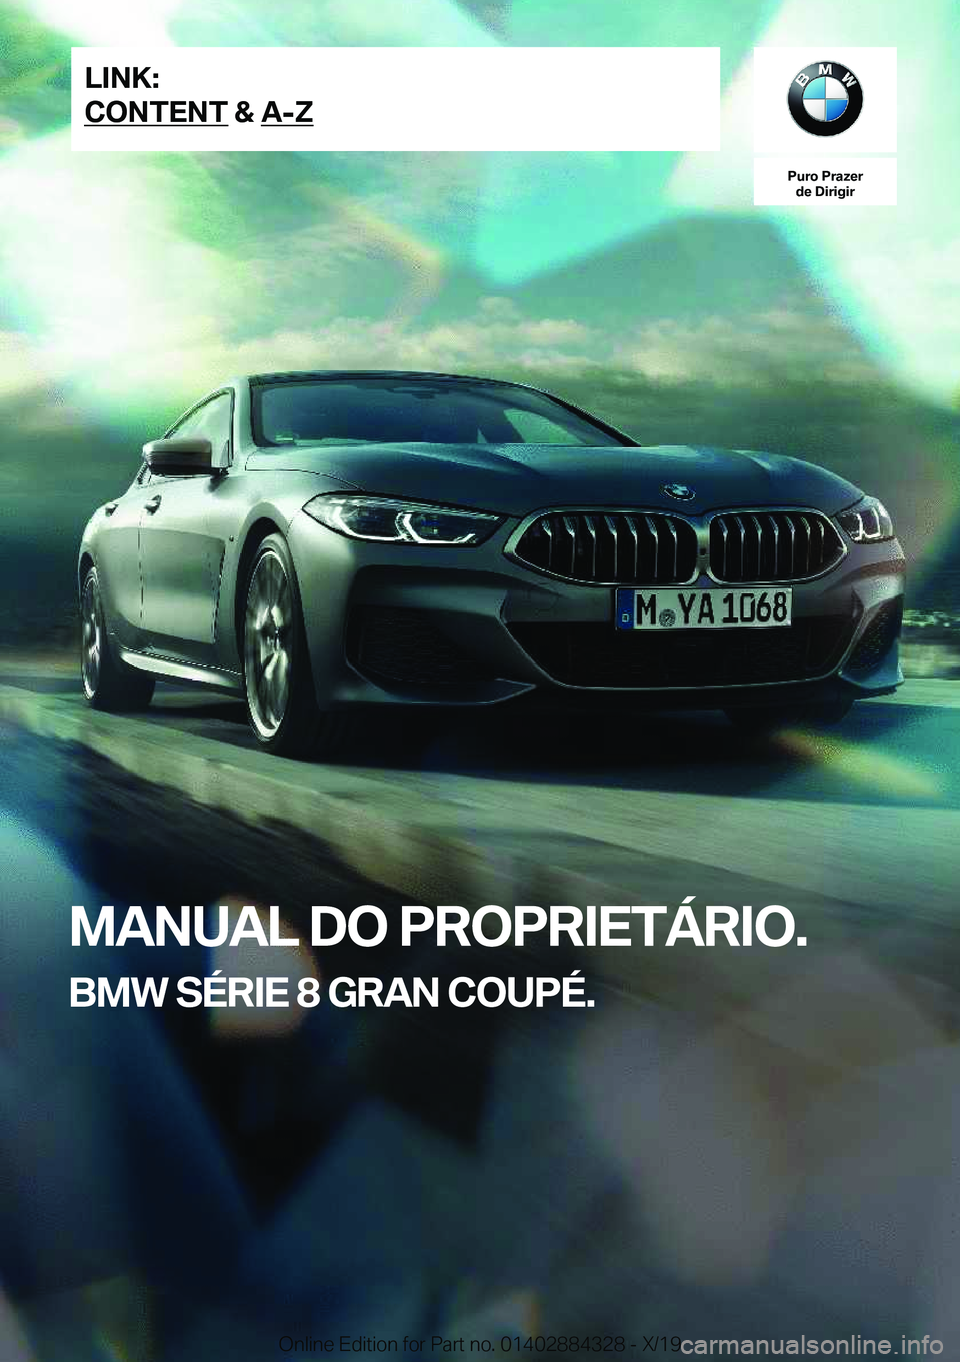 BMW 8 SERIES GRAN COUPE 2020  Manual do condutor (in Portuguese) �P�u�r�o��P�r�a�z�e�r�d�e��D�i�r�i�g�i�r
�M�A�N�U�A�L��D�O��P�R�O�P�R�I�E�T�Á�R�I�O�.
�B�M�W��S�